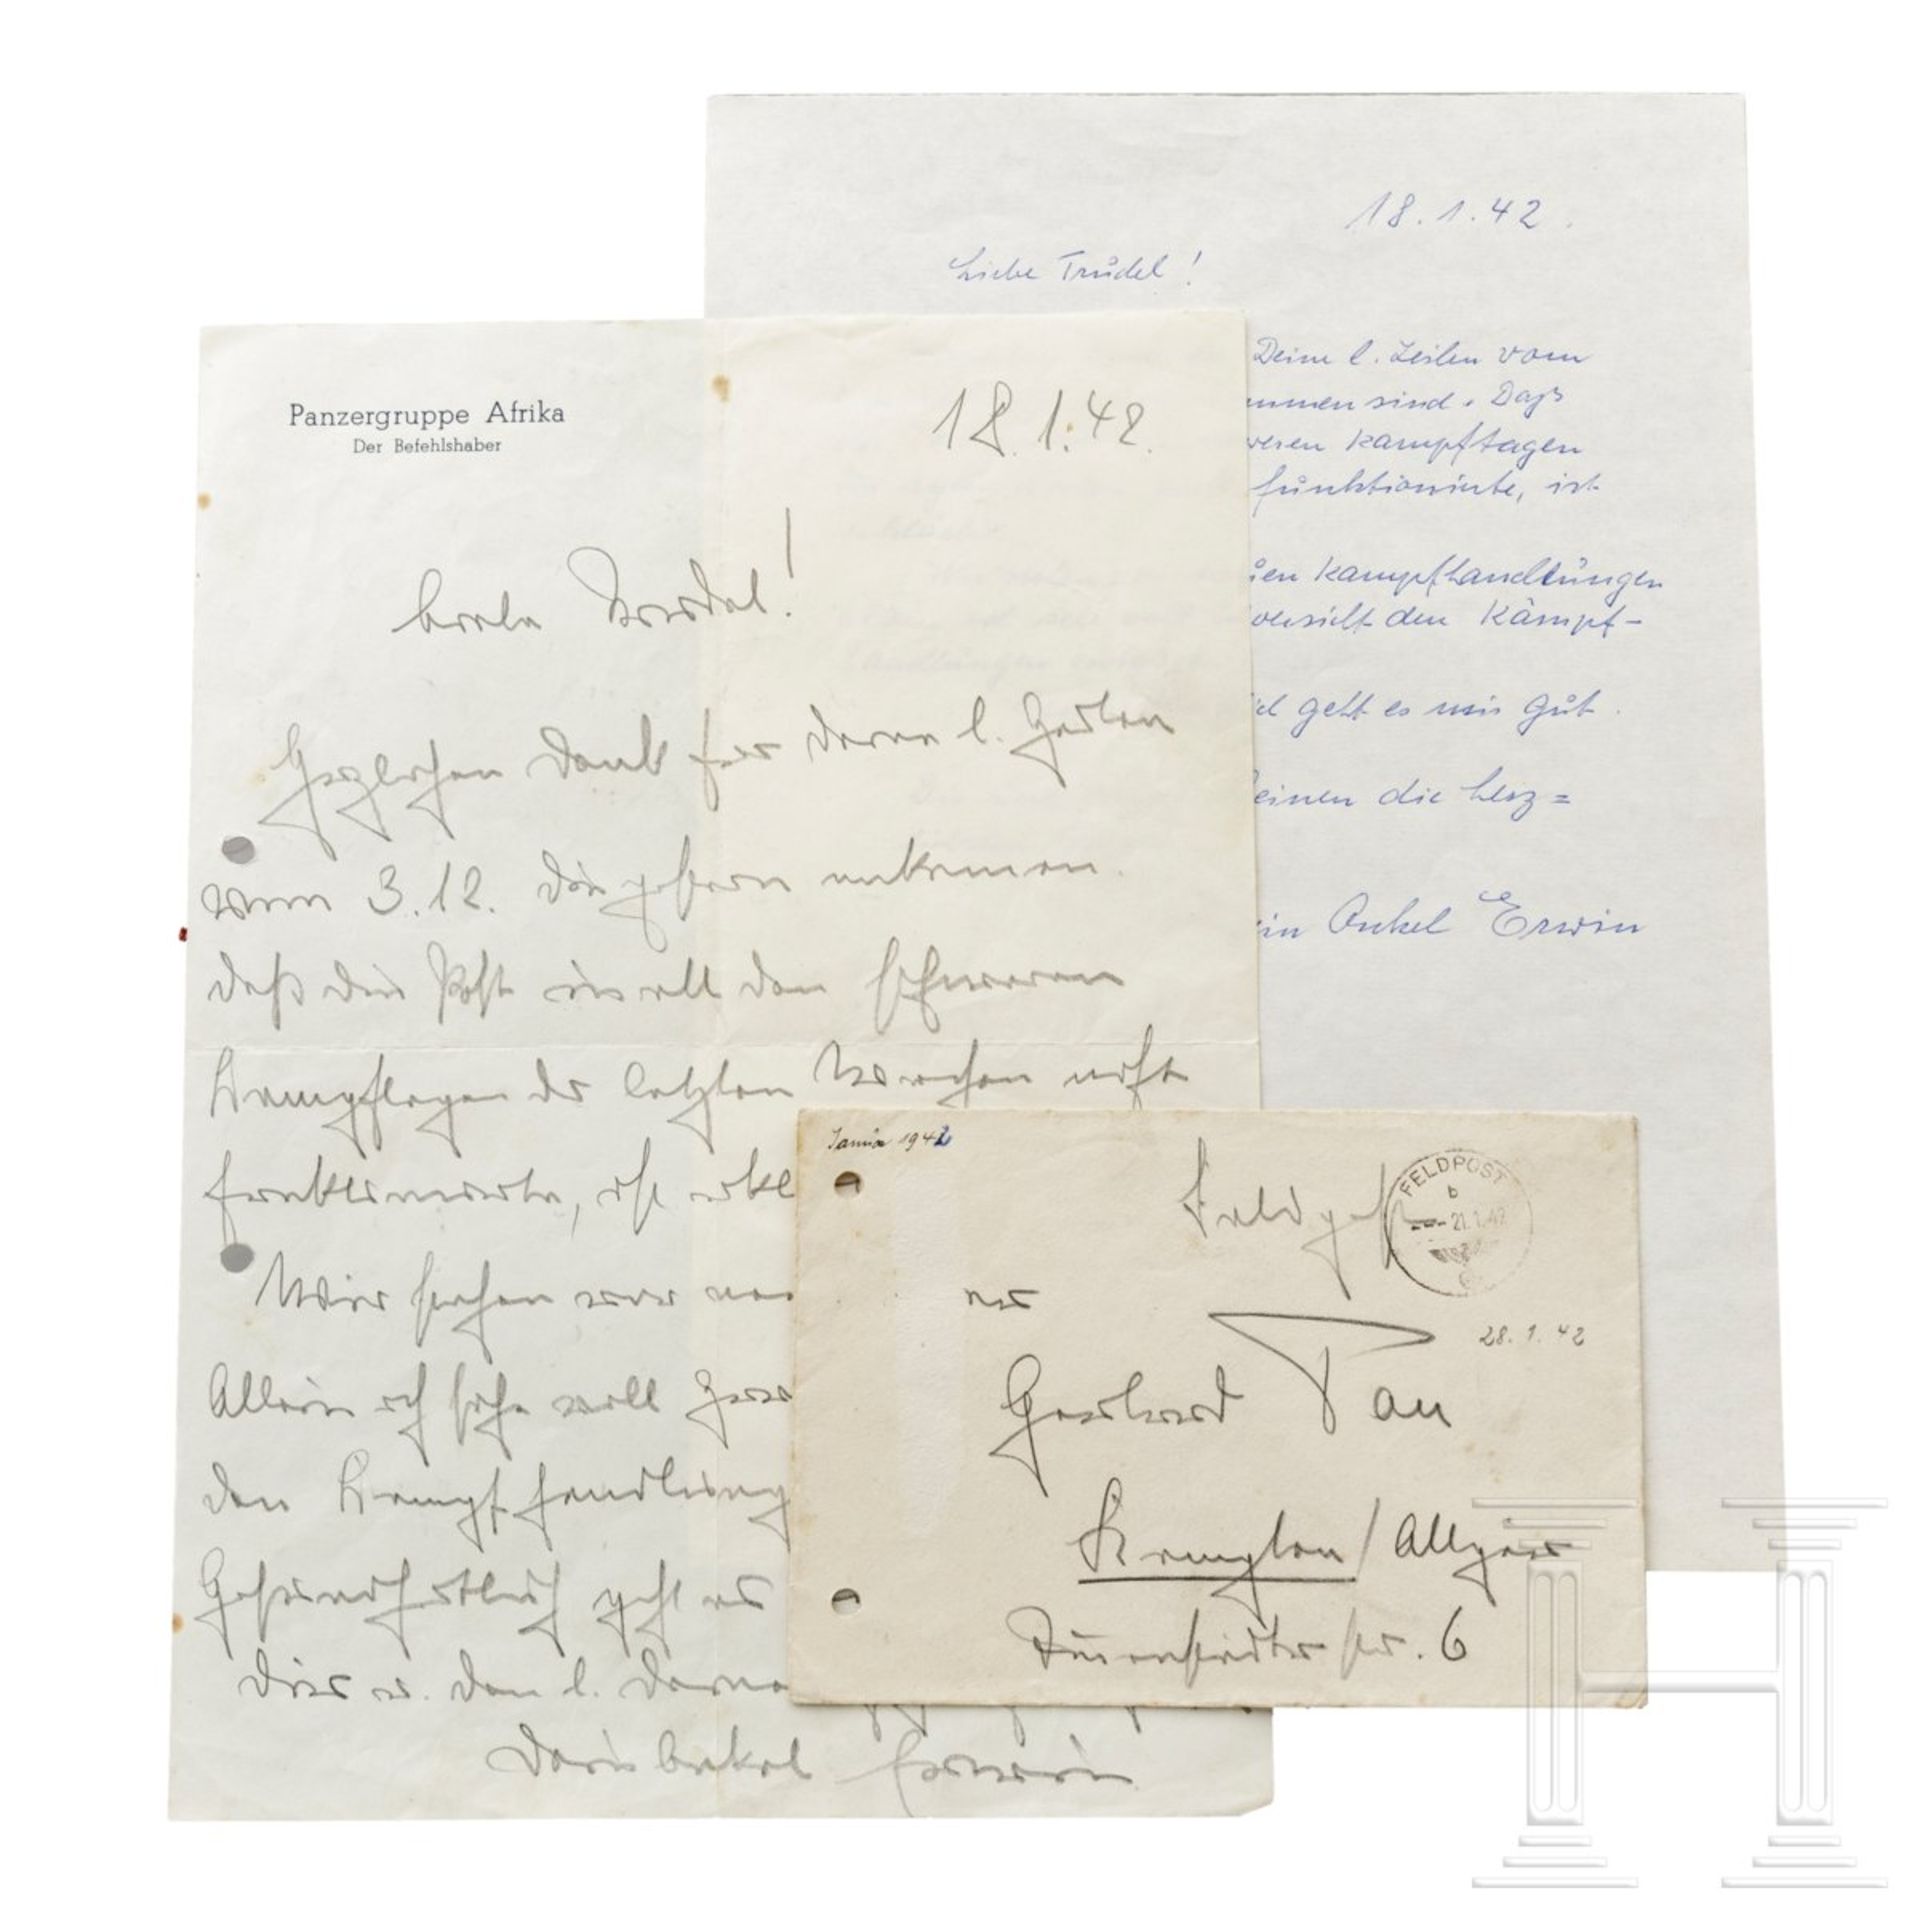 <de>GFM Erwin Rommel – Brief an seine Tochter Gertrud Pan vom 18.1.1942<br>Gedruckter Briefkopf "Pan